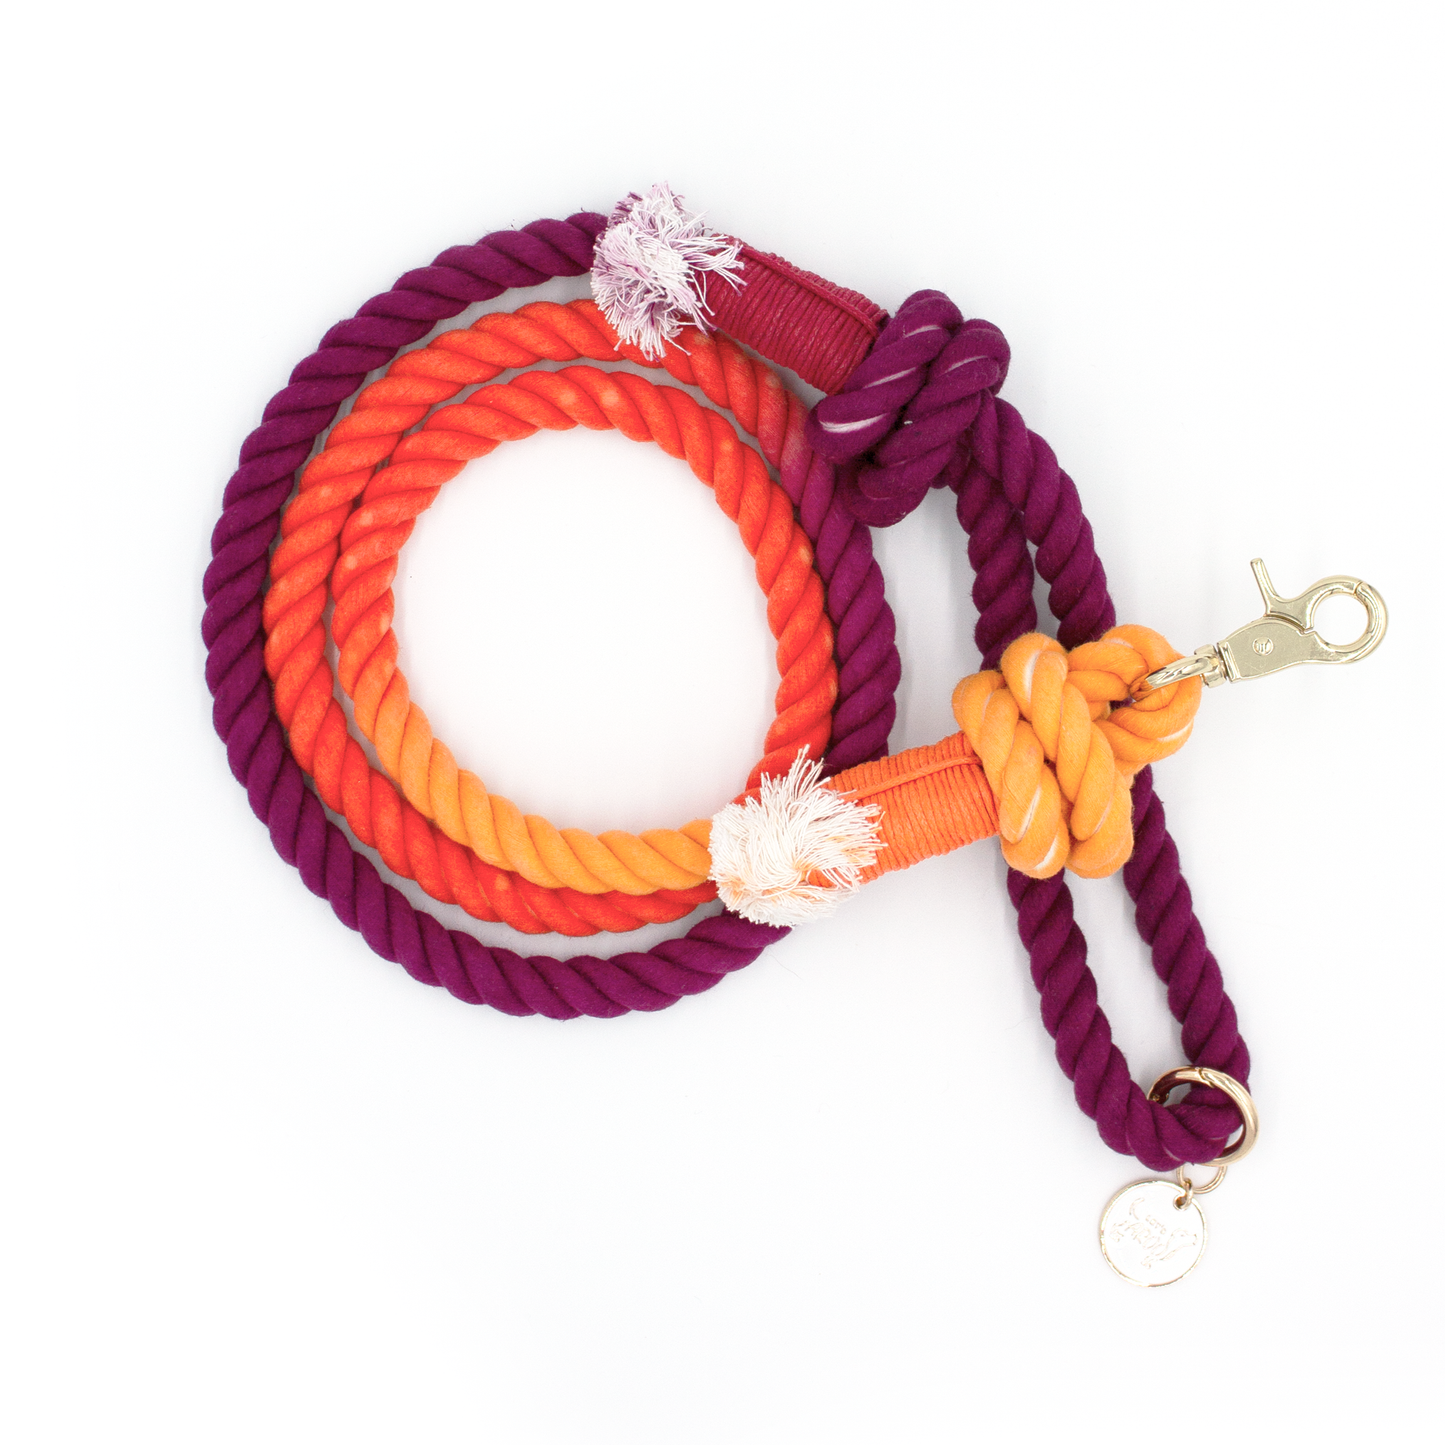 Maroon and Orange Rope Leash